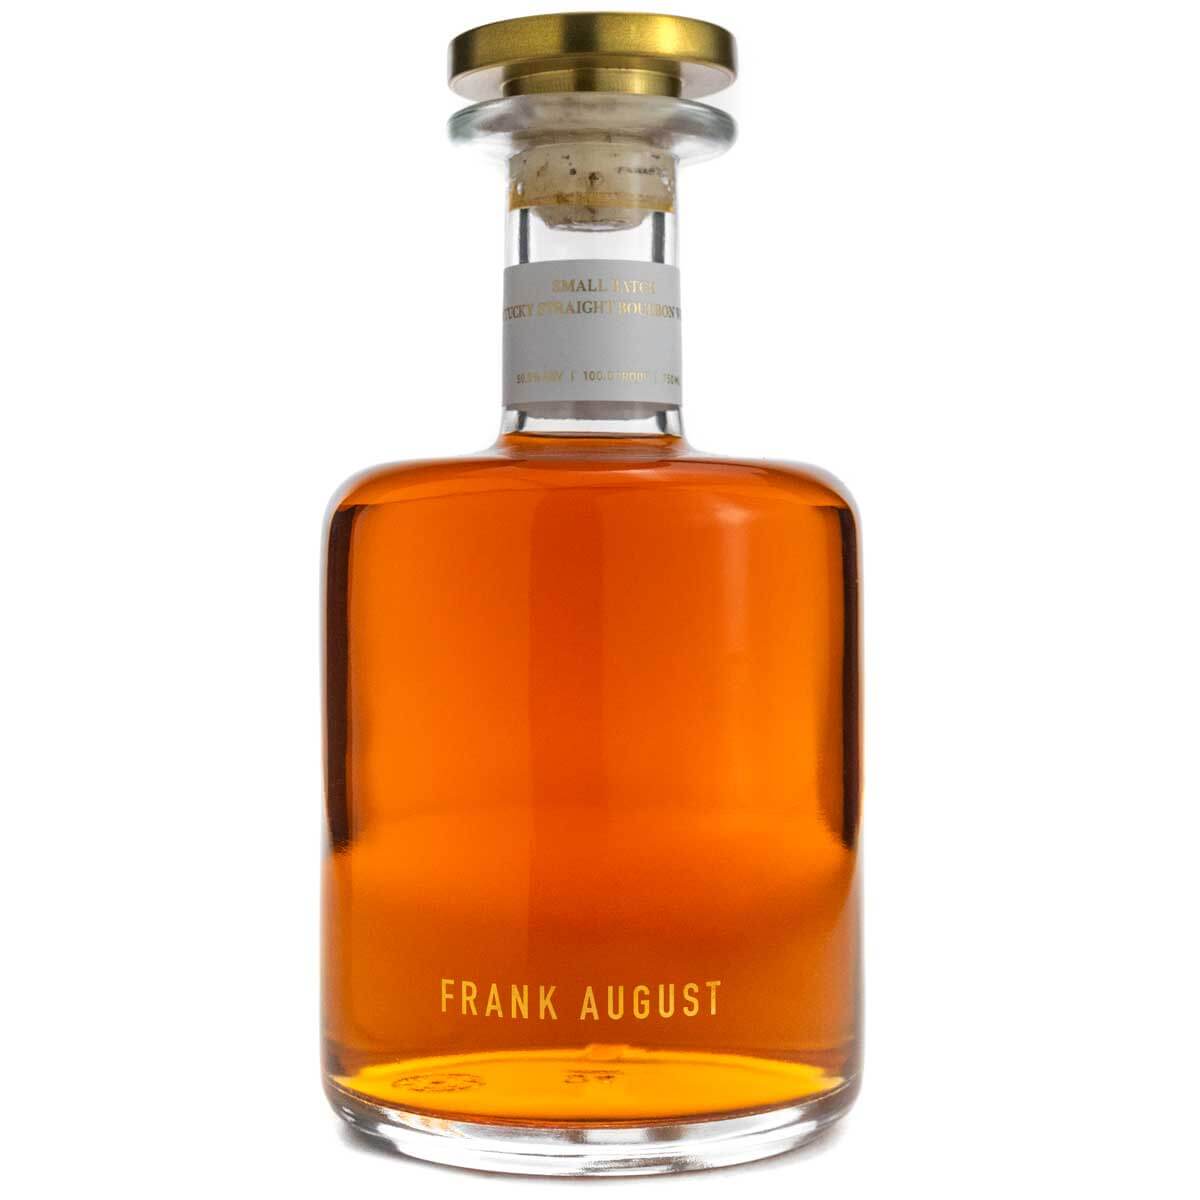 Frank August Small Batch bottle